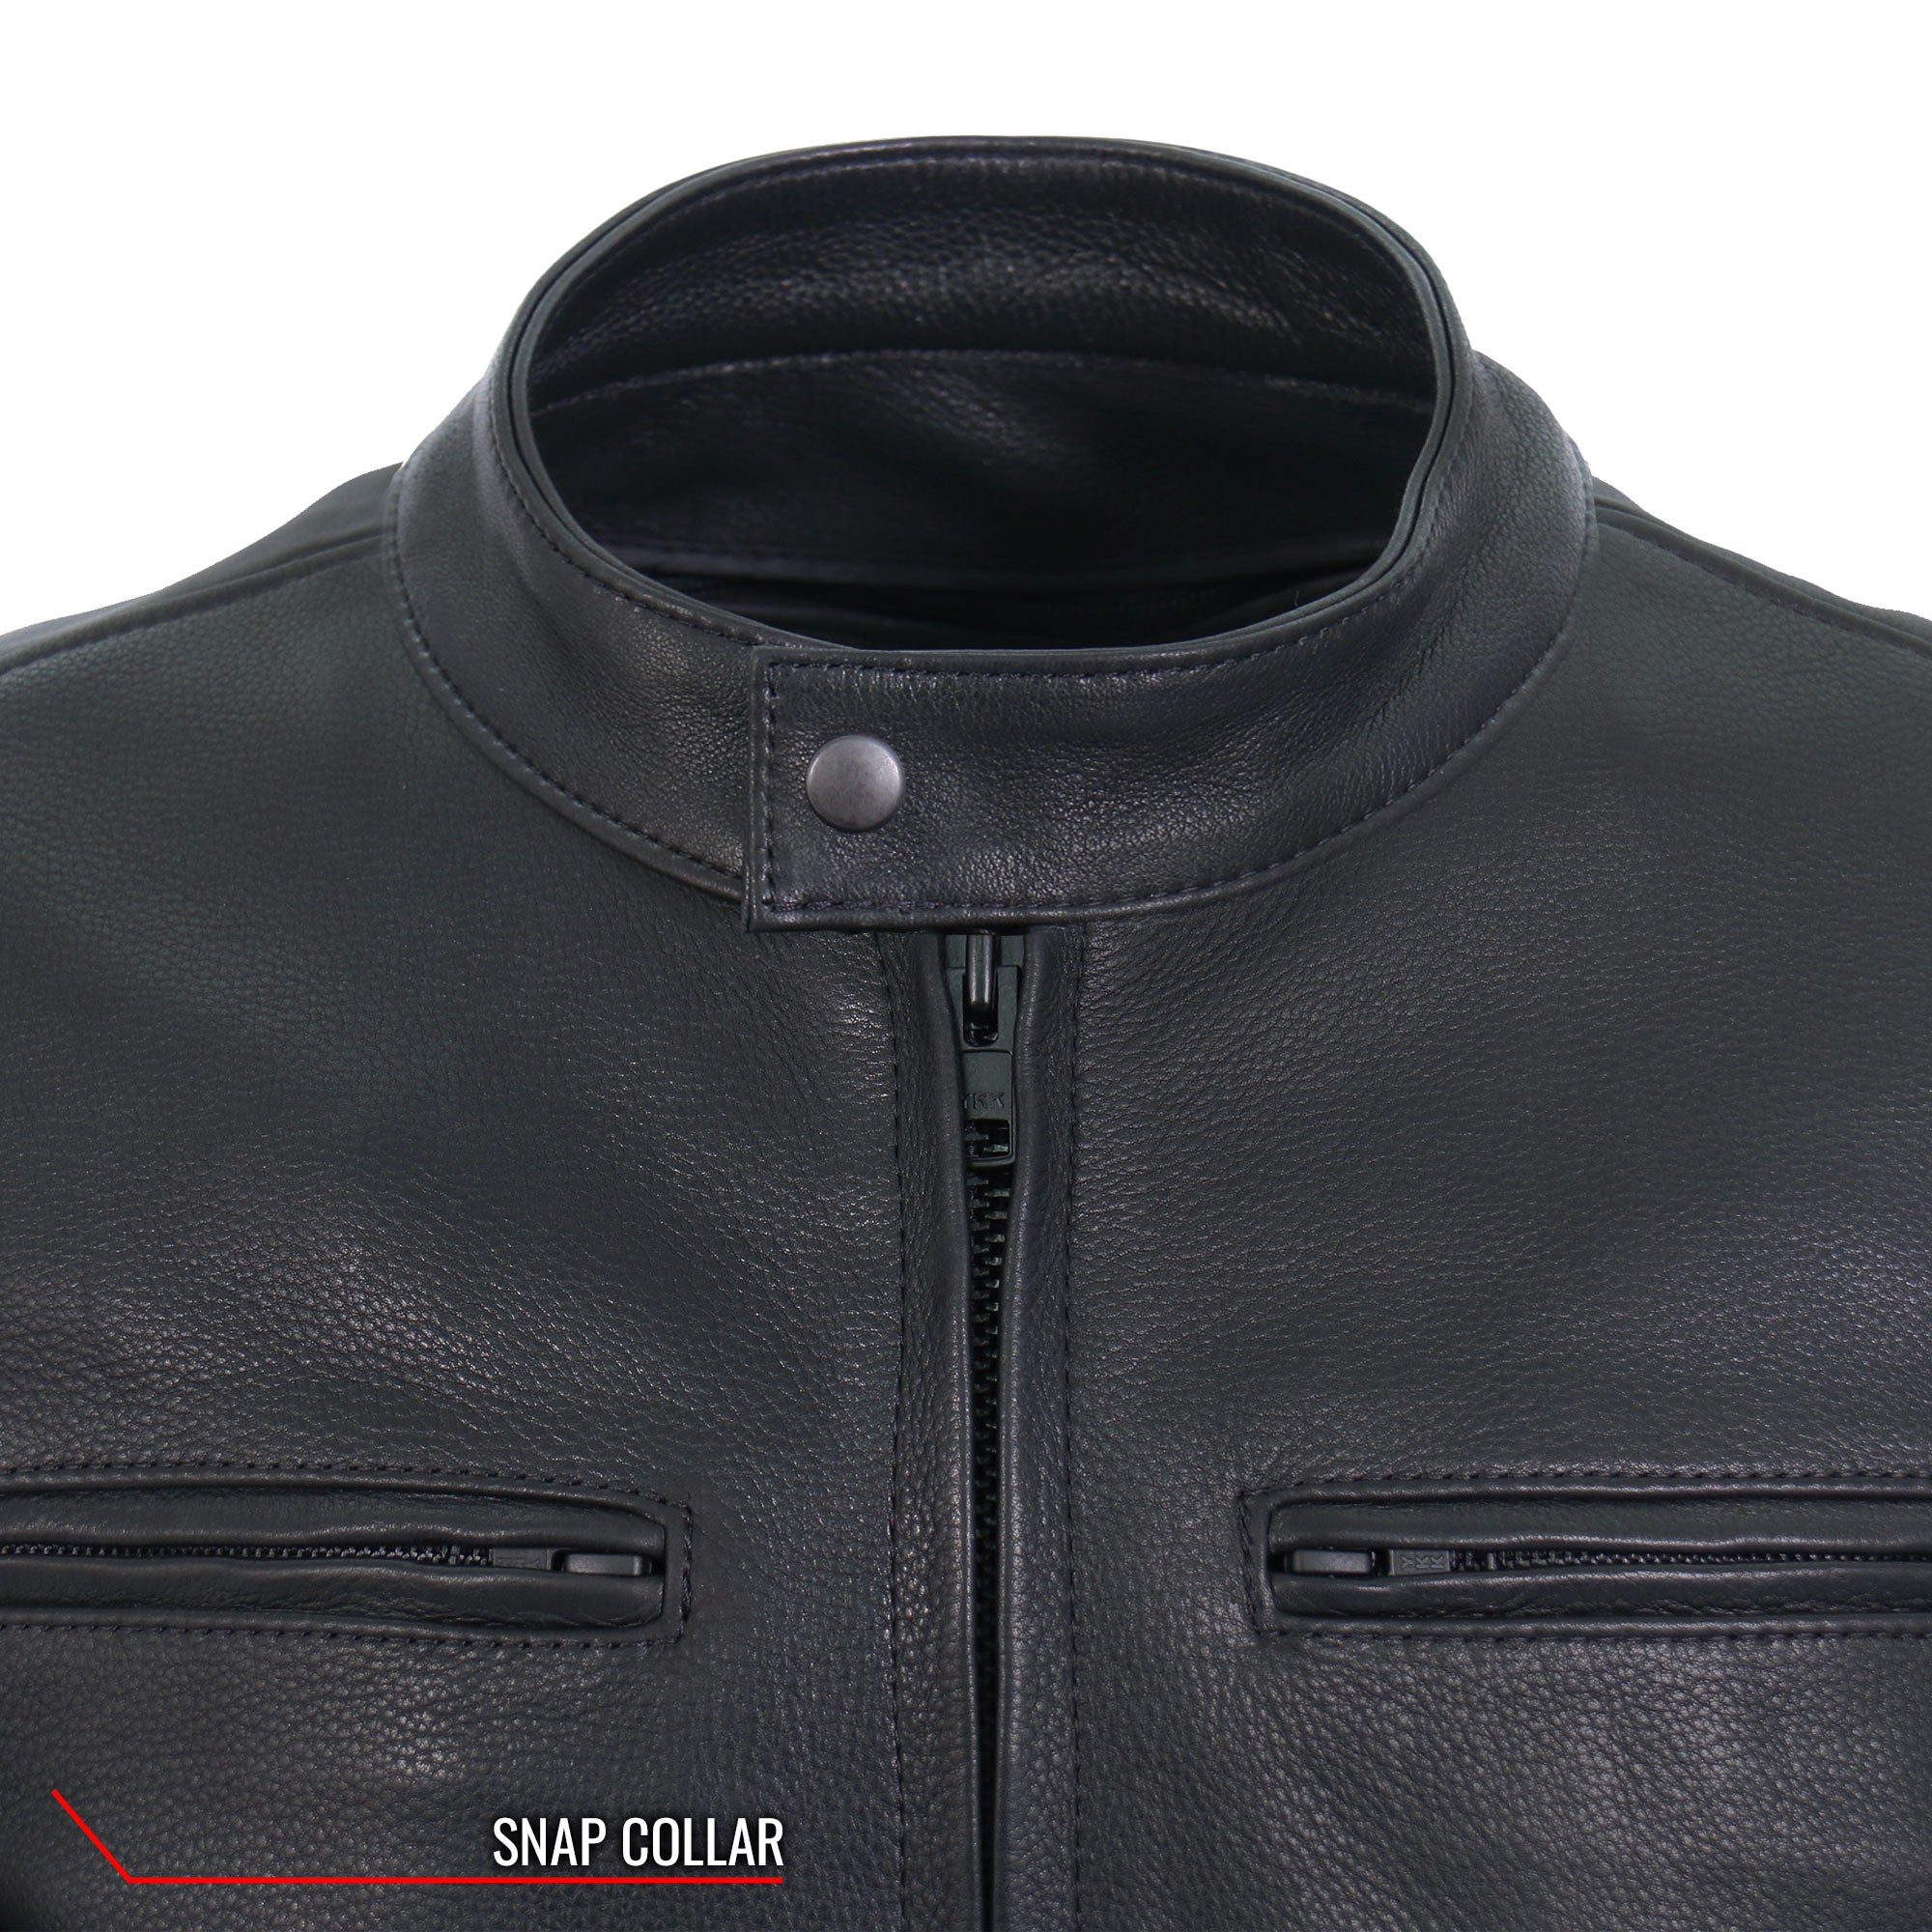 Hot Leathers JKM5001 Men's USA Made Premium Leather Motorcycle Biker Racer Jacket